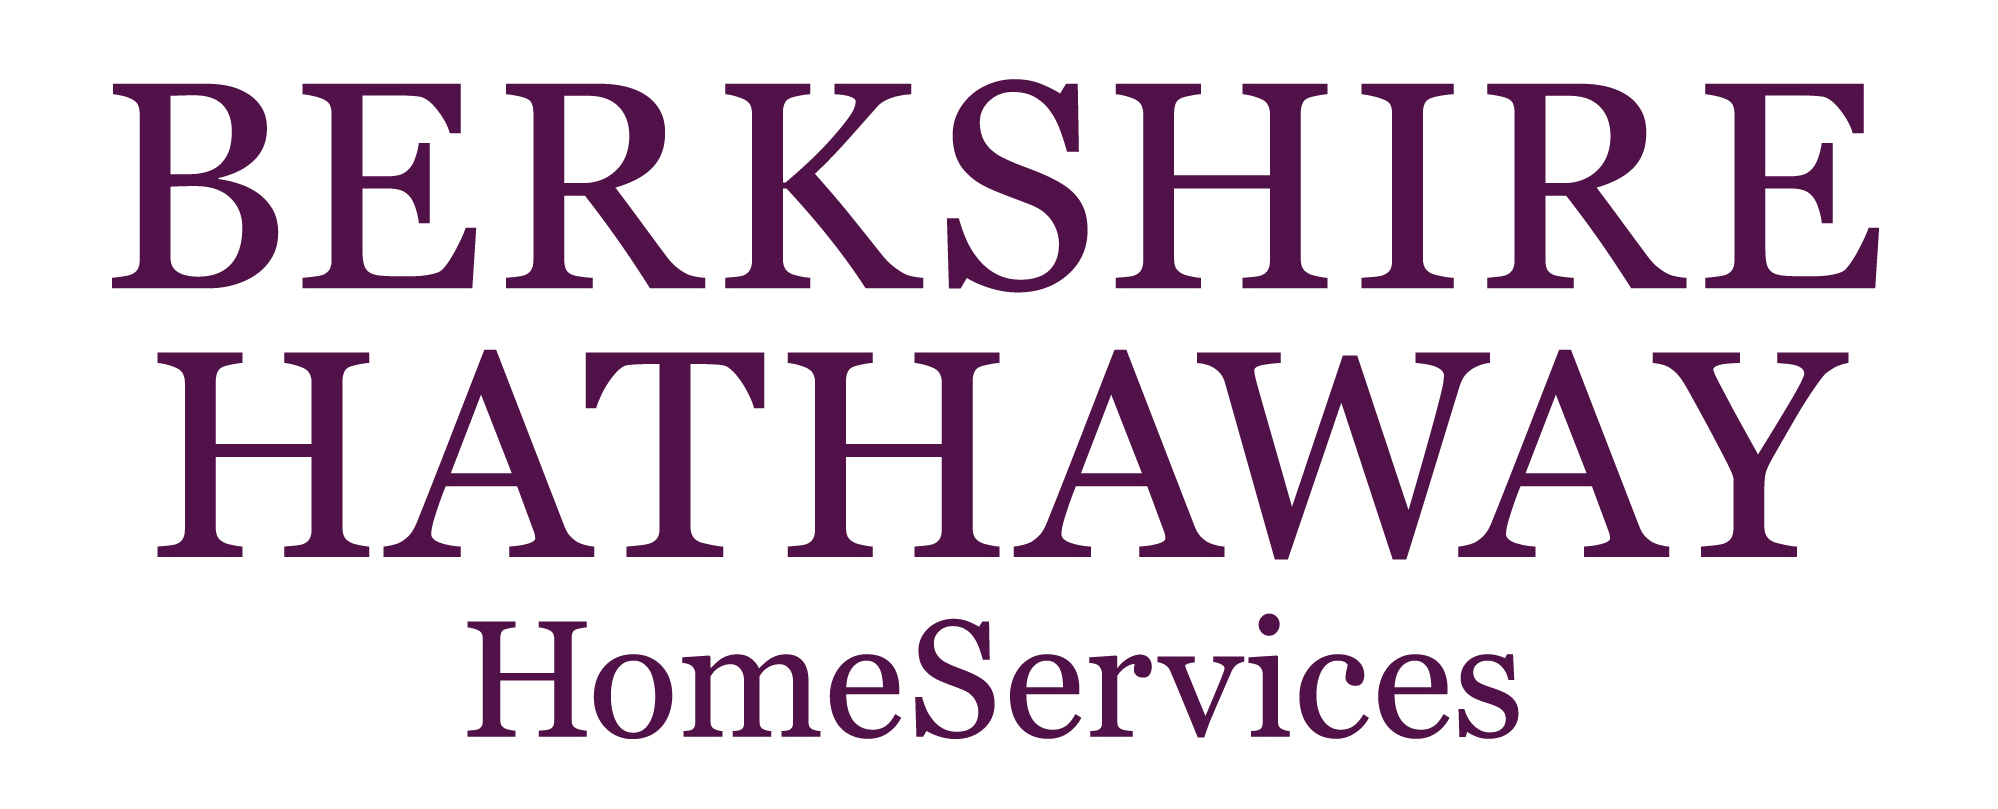 Berkshire Hathaway Logo Transparent Image